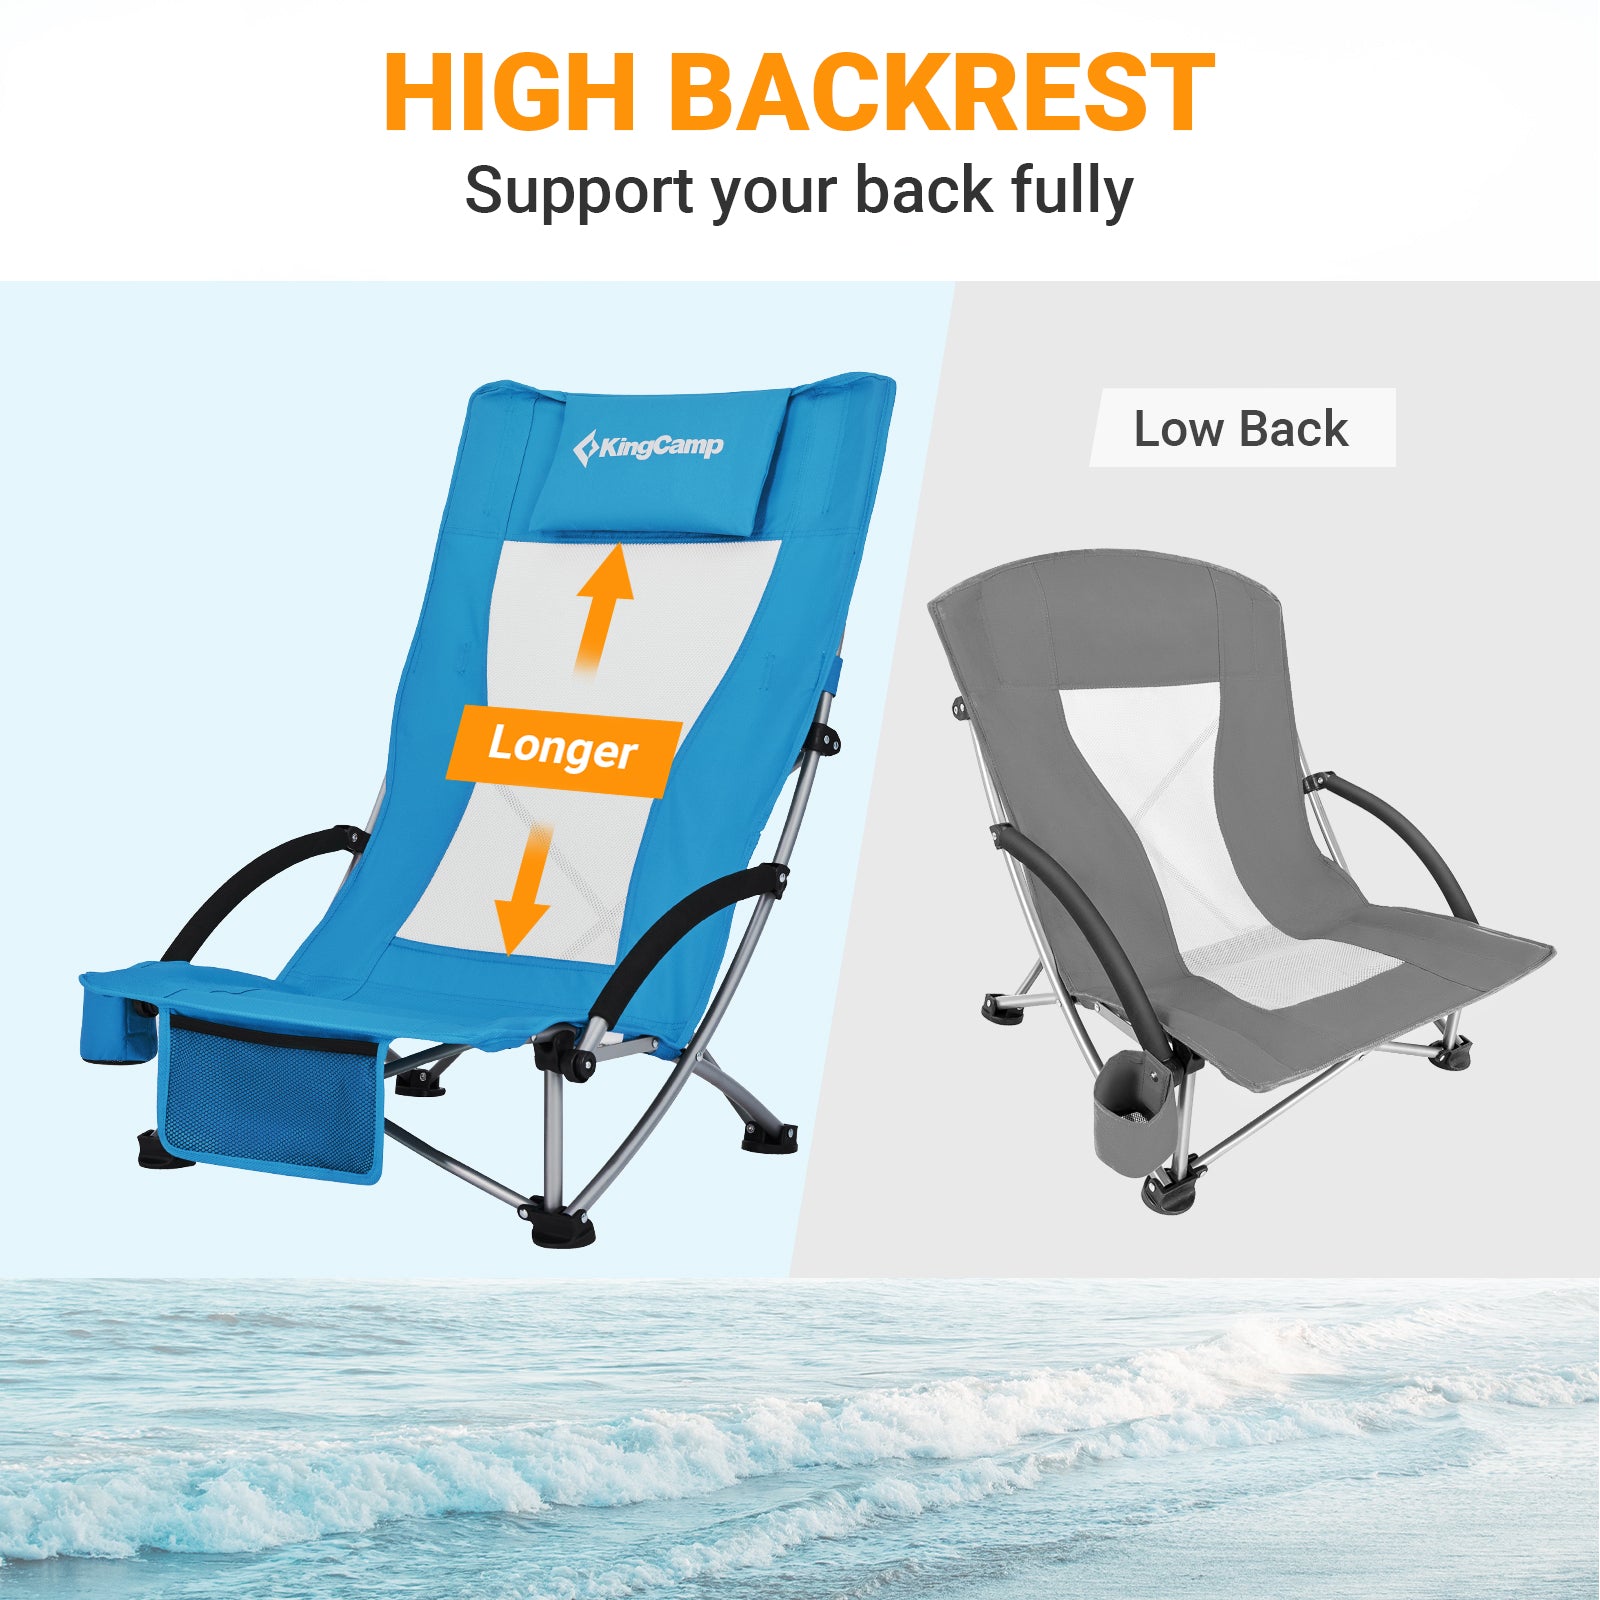 KingCamp High Mesh Back Beach Folding Chair